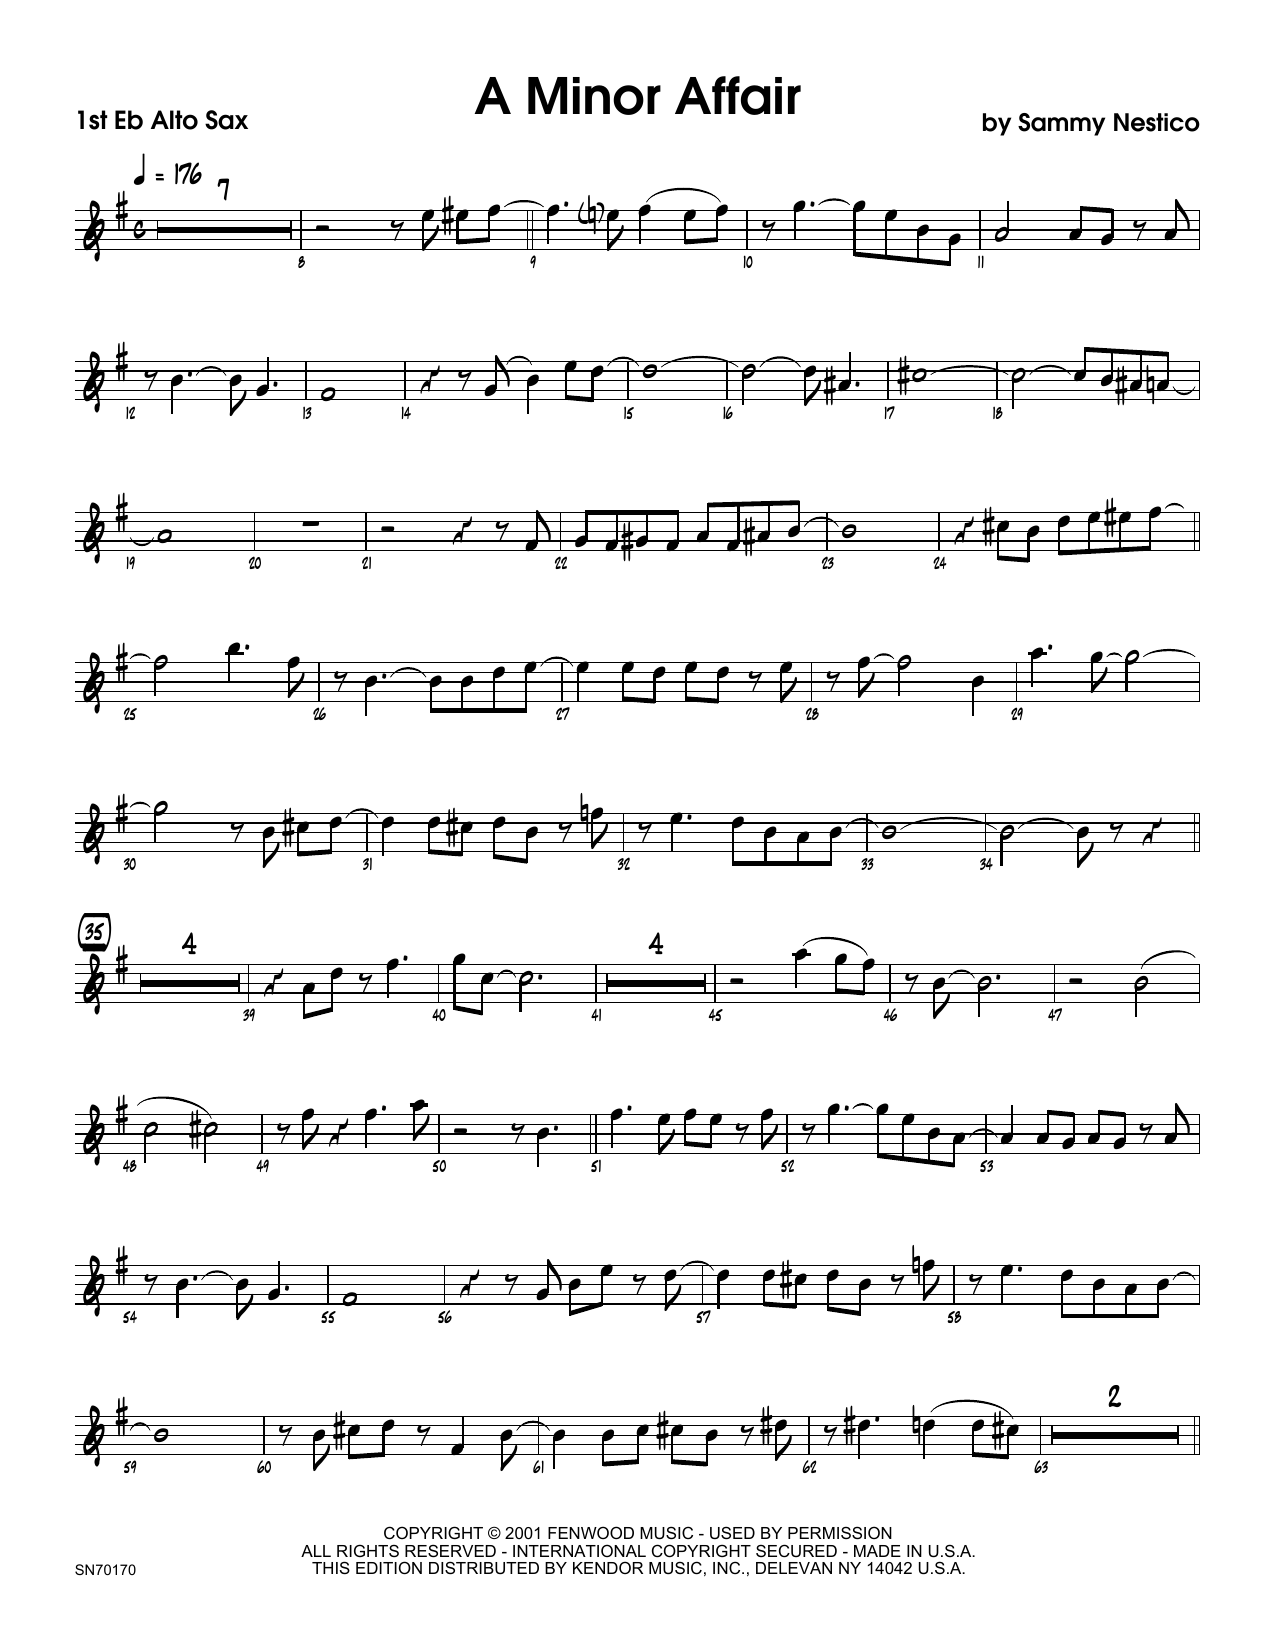 Download Sammy Nestico A Minor Affair - 1st Eb Alto Saxophone Sheet Music